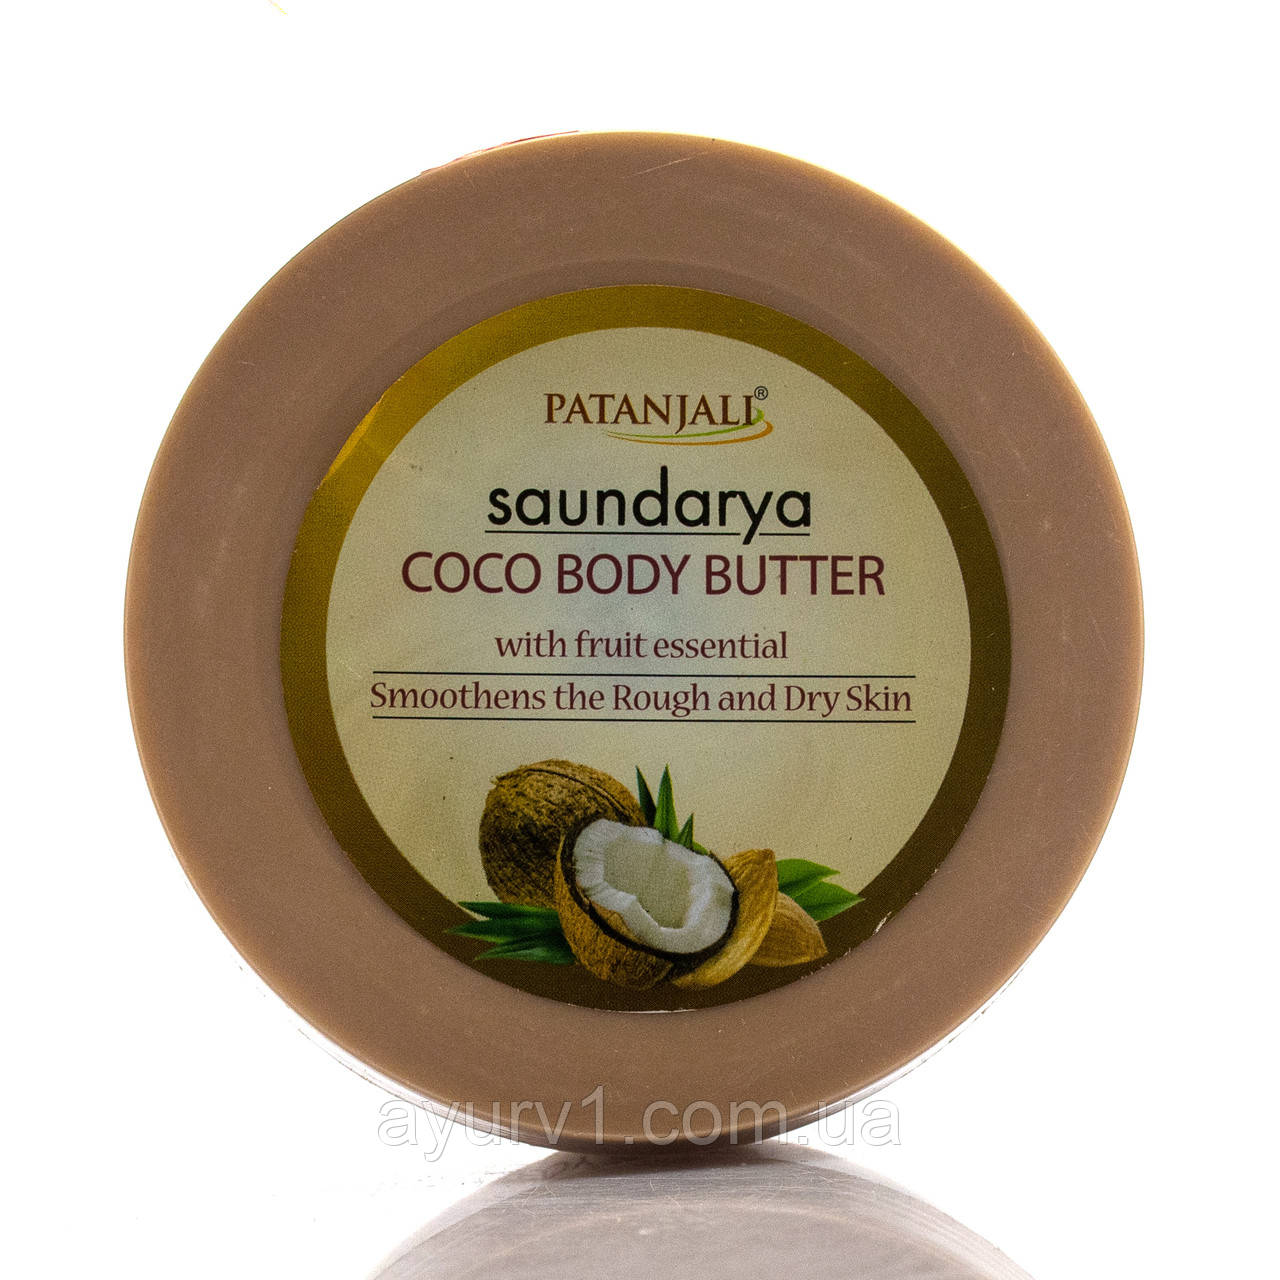 Кокосове крем-олія для тіла Саундарія,/Saundarya coco body butter/Patanjali/200 g